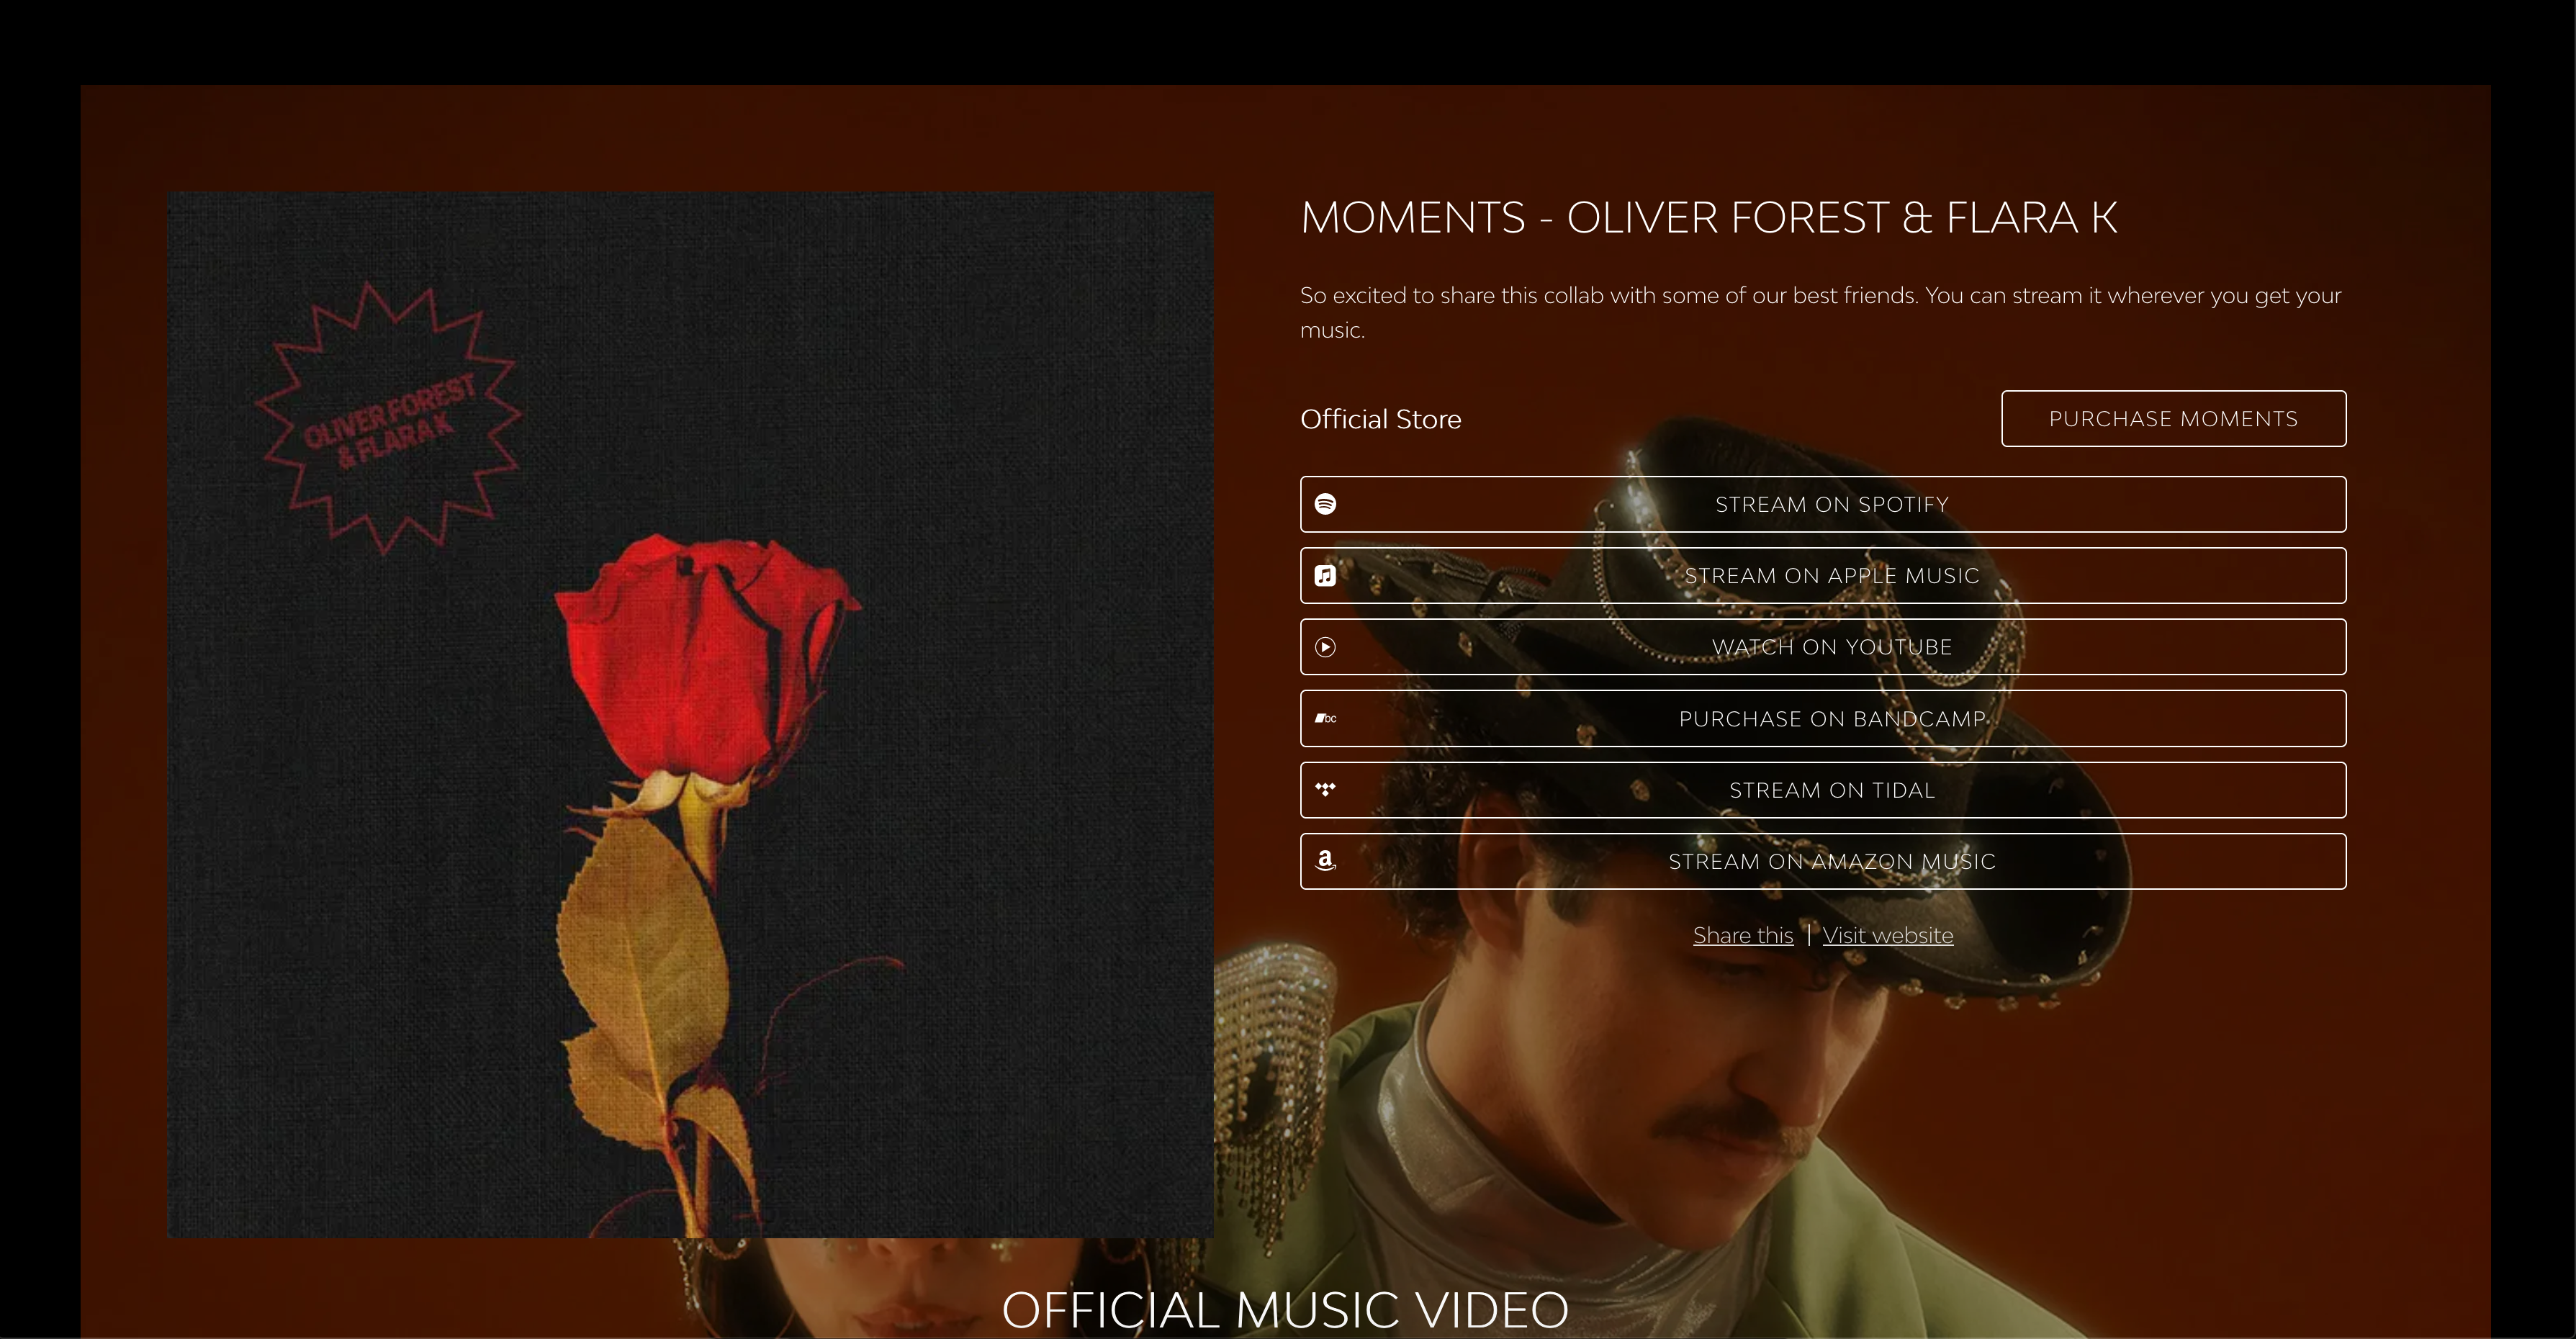 Screenshot of album smartlinks for release by artists Oliver Forest and Flara K